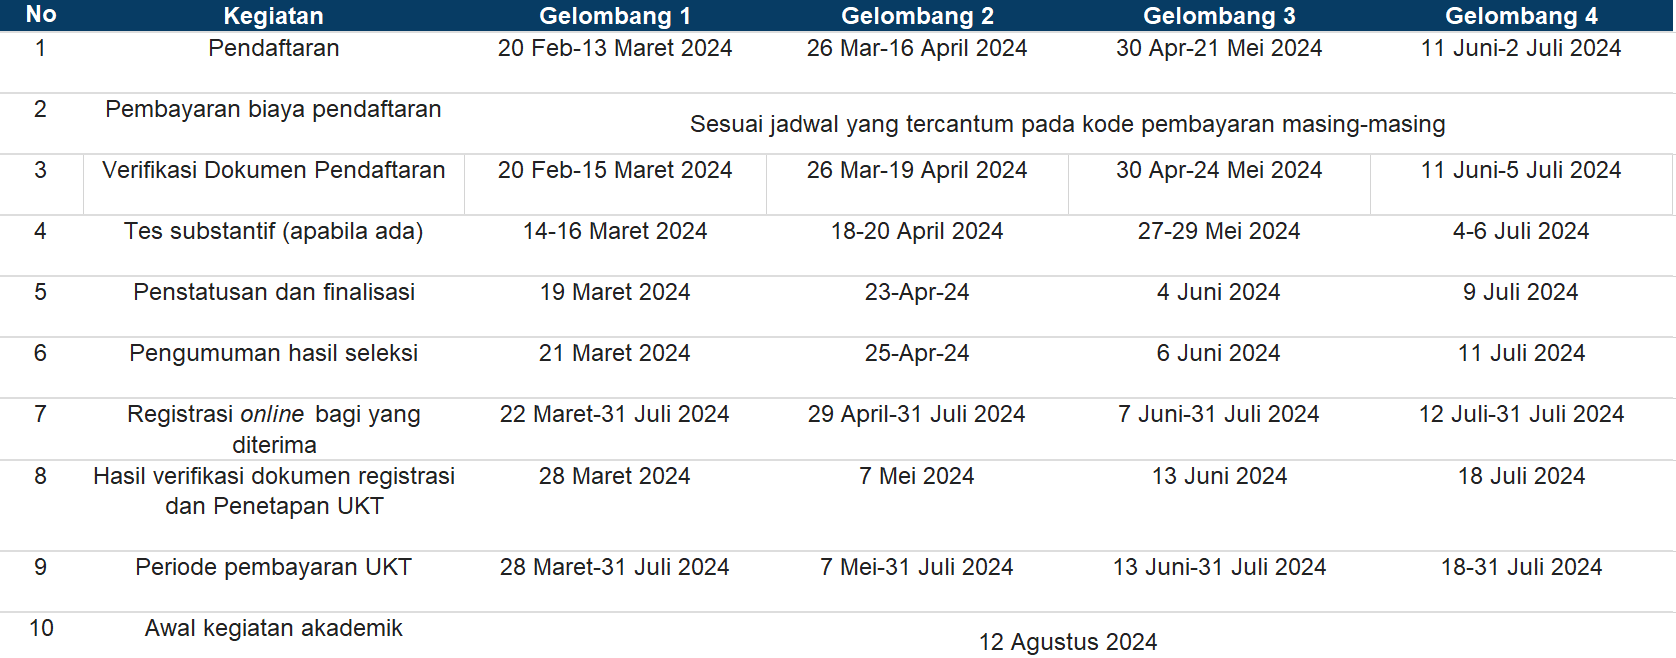 JADWAL PENERIMAAN MAHASISWA BARU PROGRAM PASCASARJANA SEMESTER GASAL TA 2024/2025